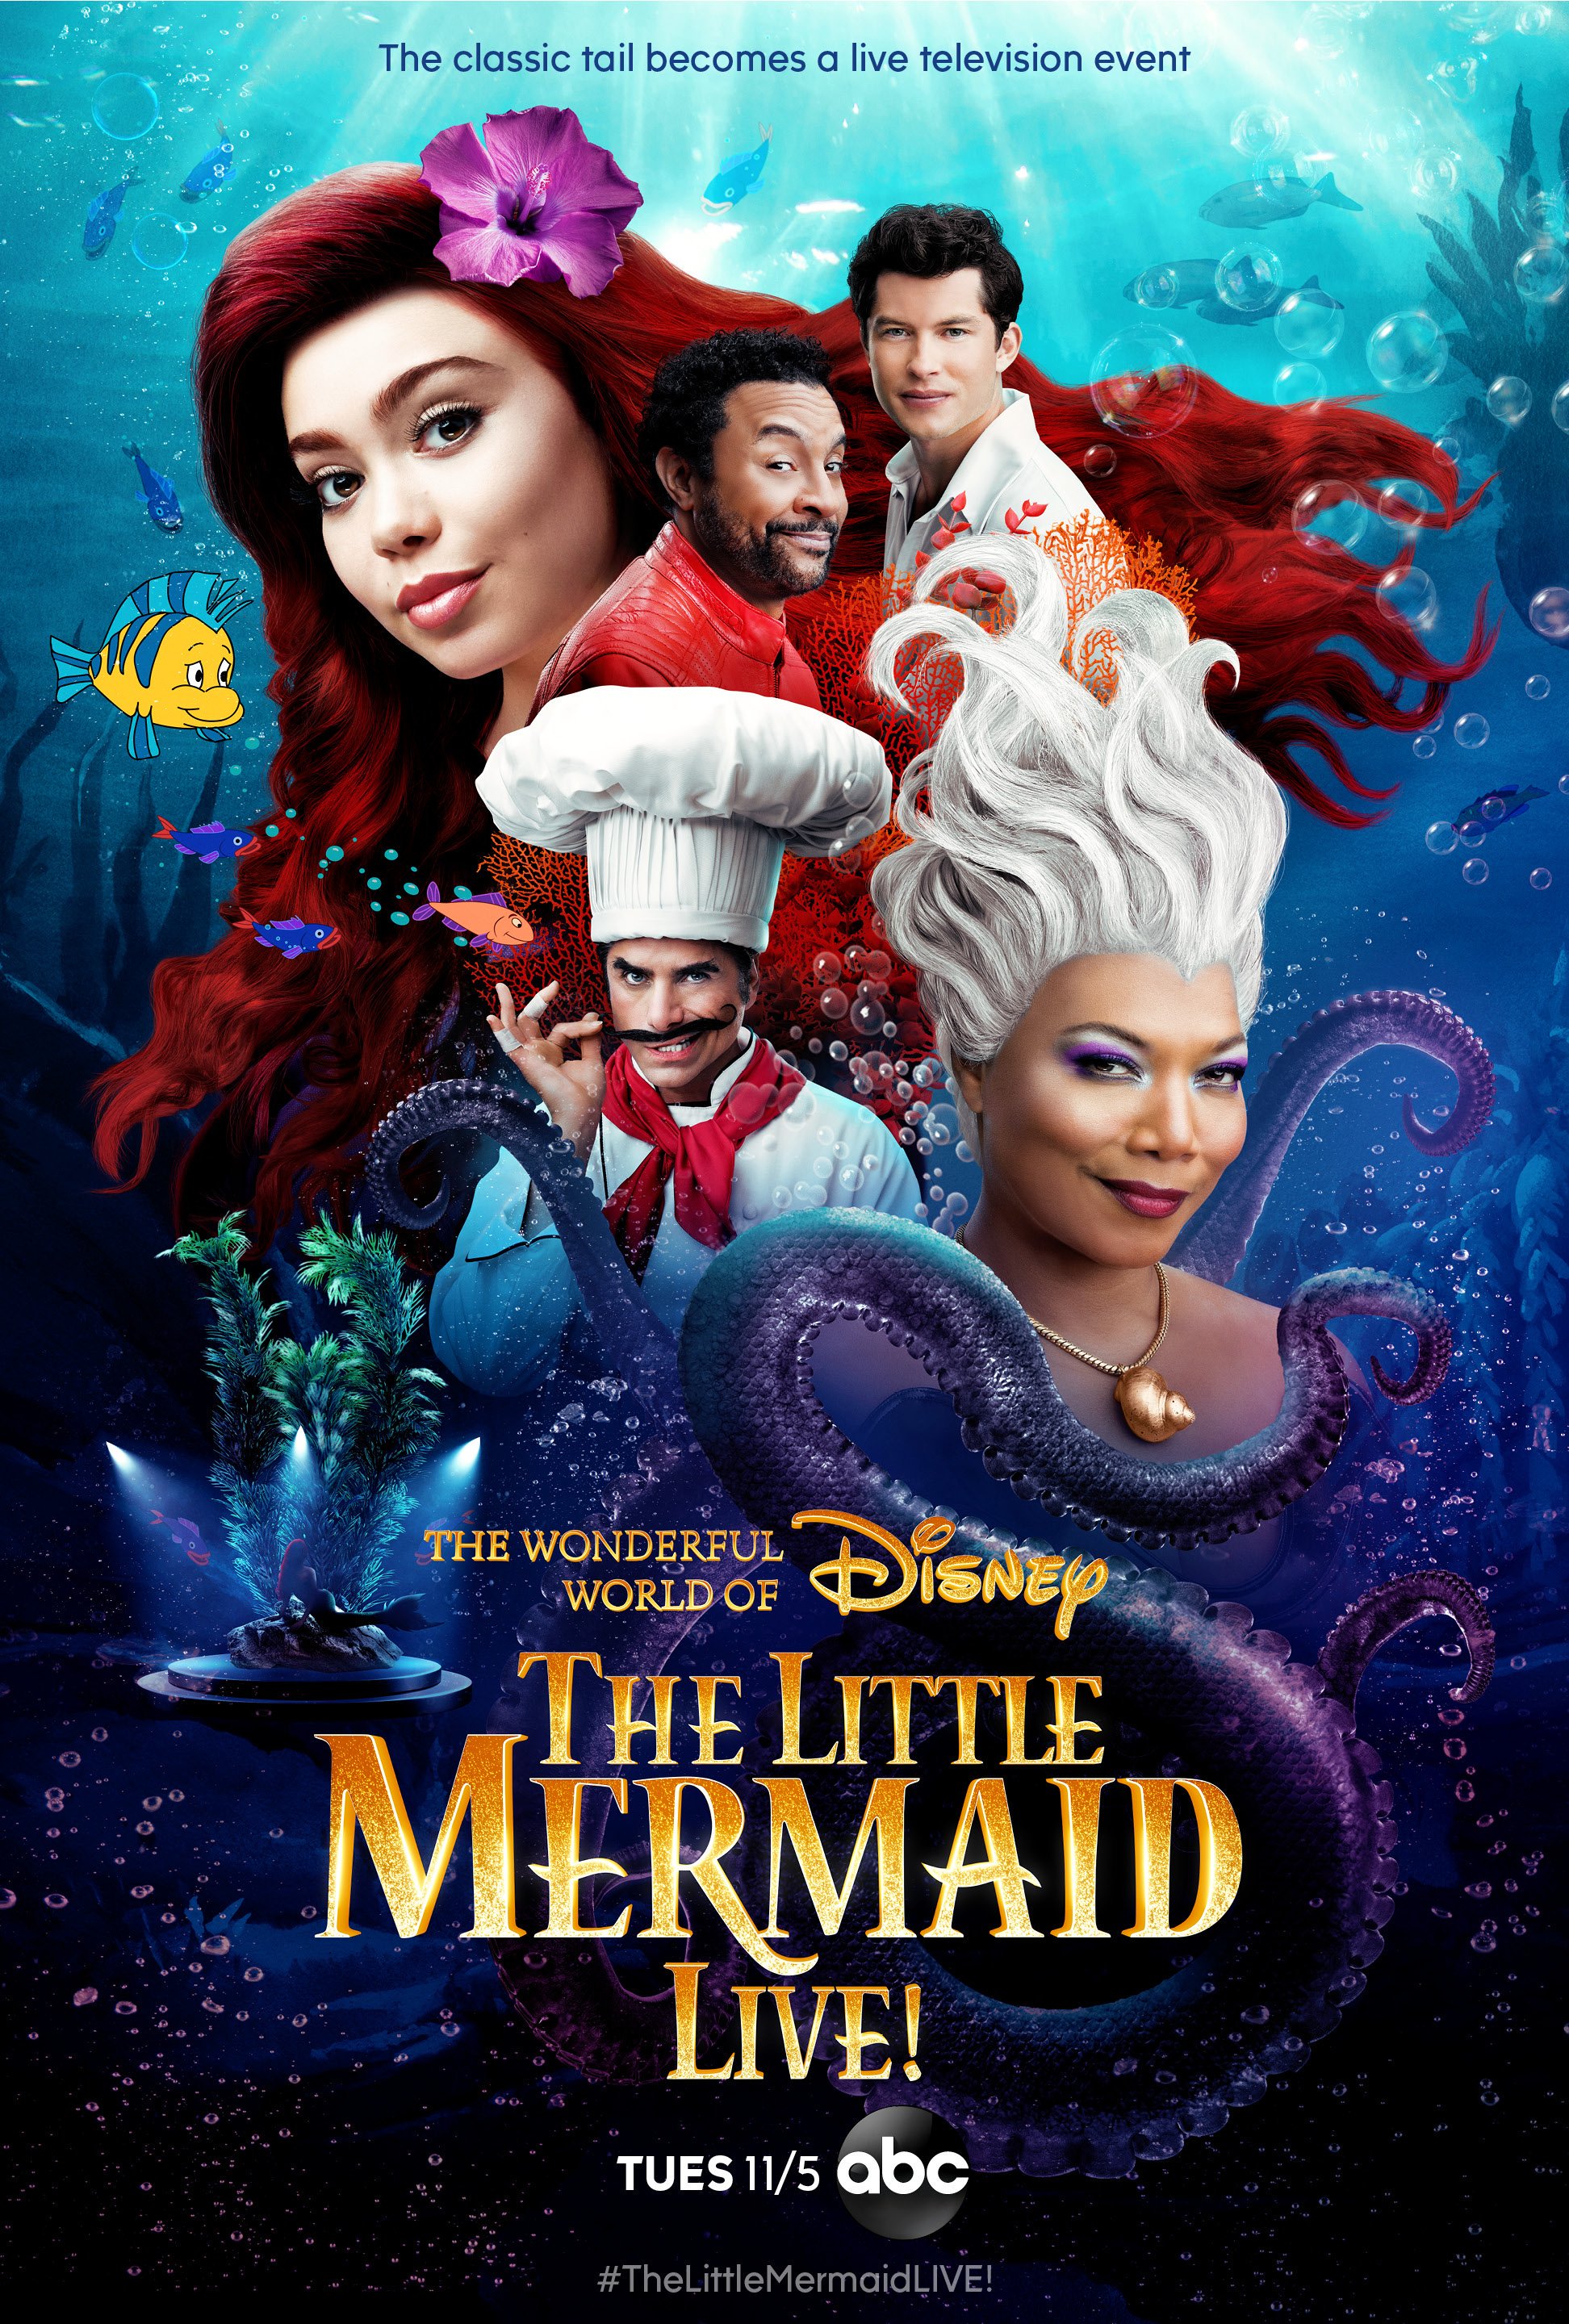 The Wonderful World of Disney: The Little Mermaid Live!